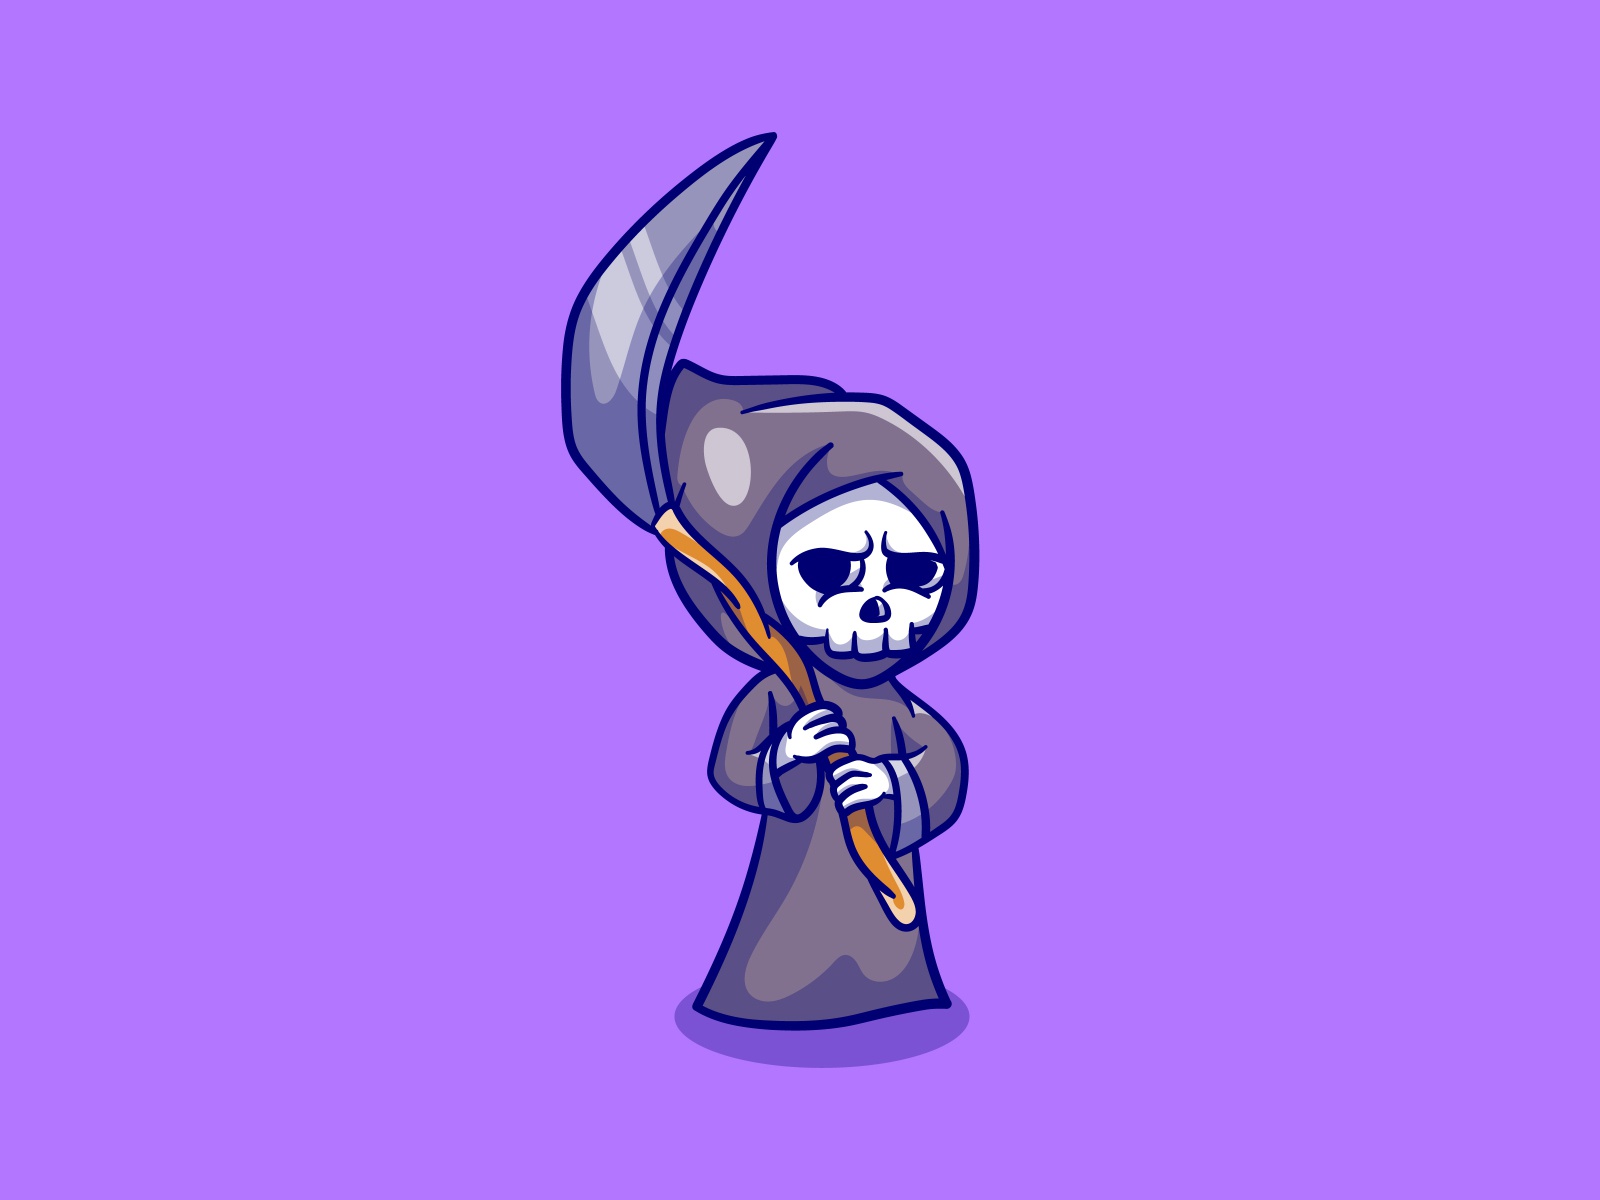 Cute grim reaper illustration holding a scythe